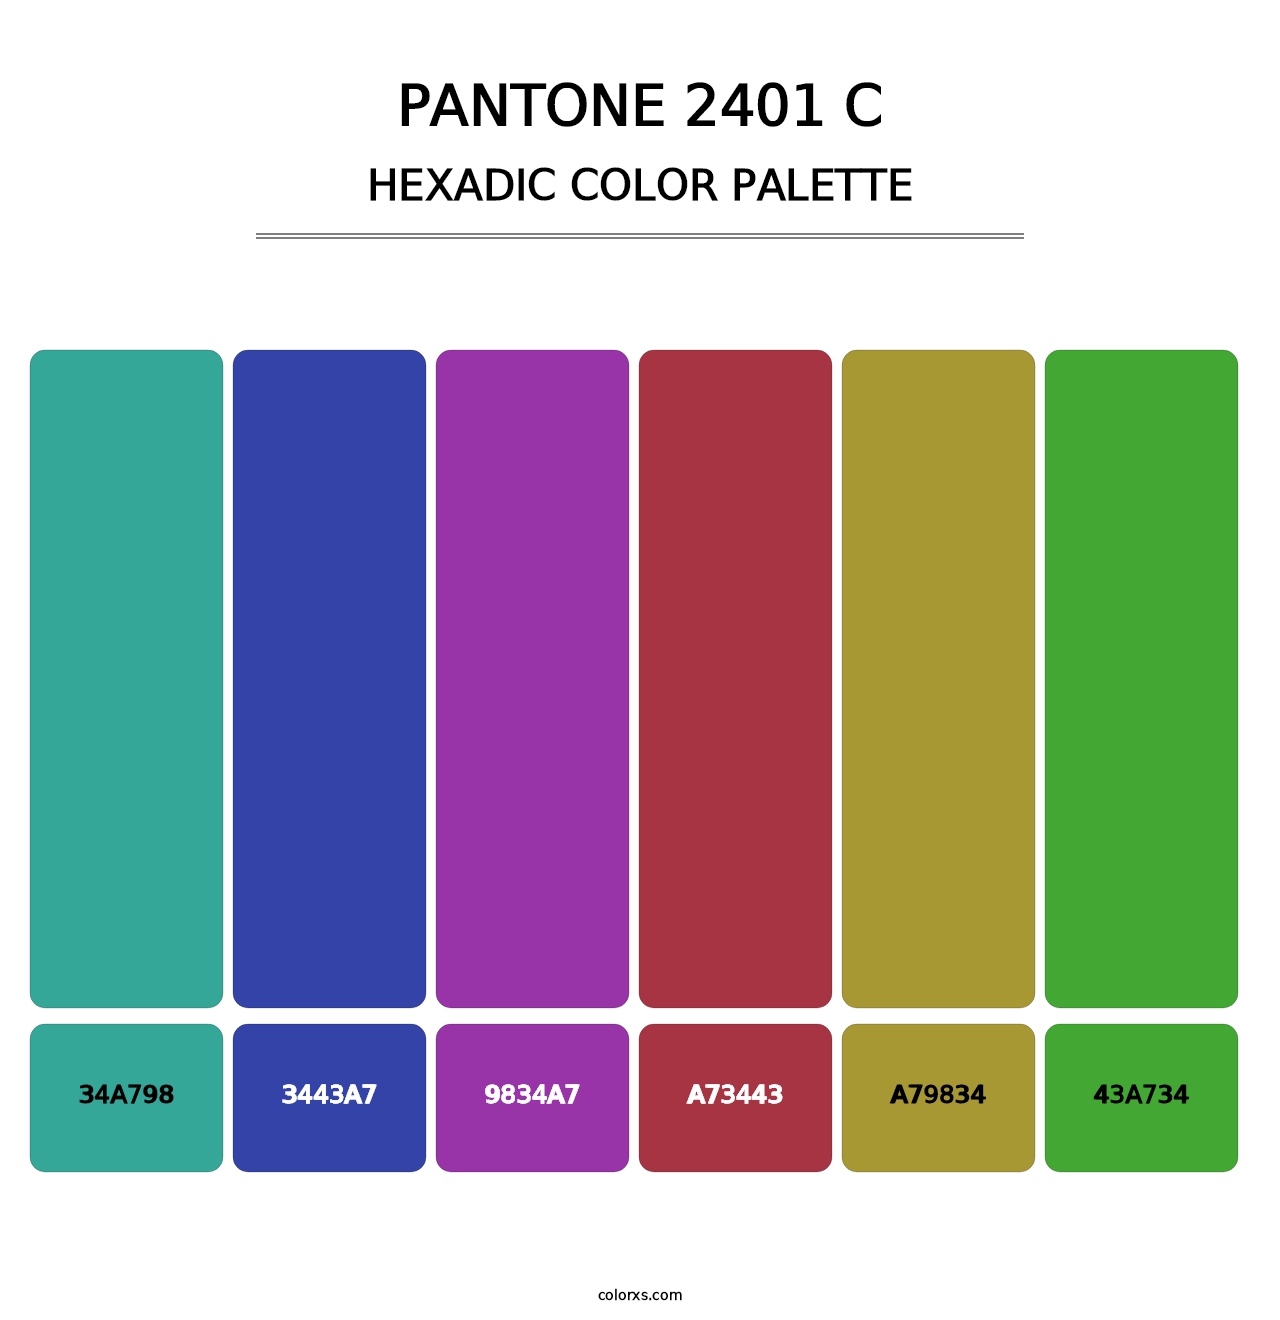 PANTONE 2401 C - Hexadic Color Palette